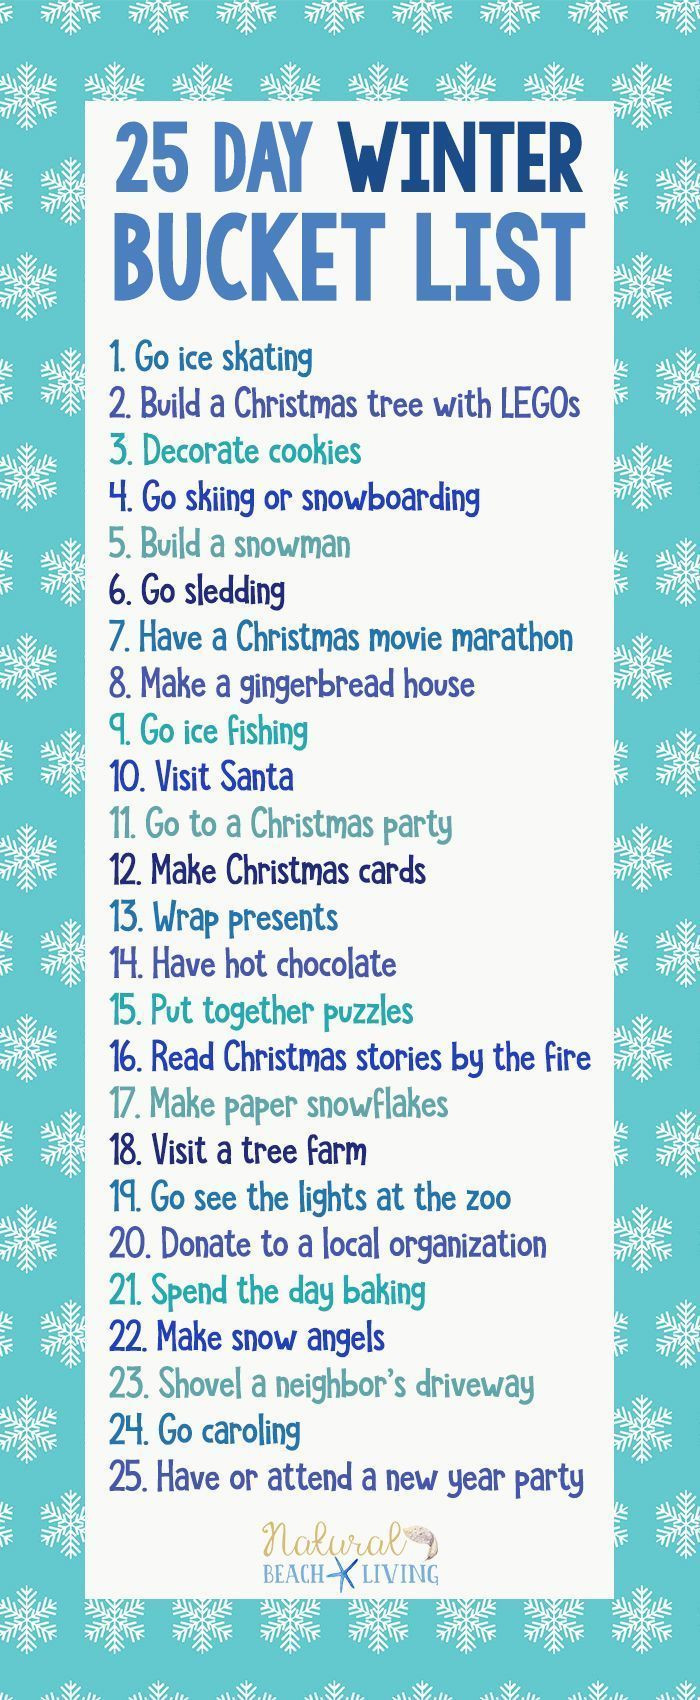 Winter Break Activities
 25 Winter Bucket List Ideas for Family Fun